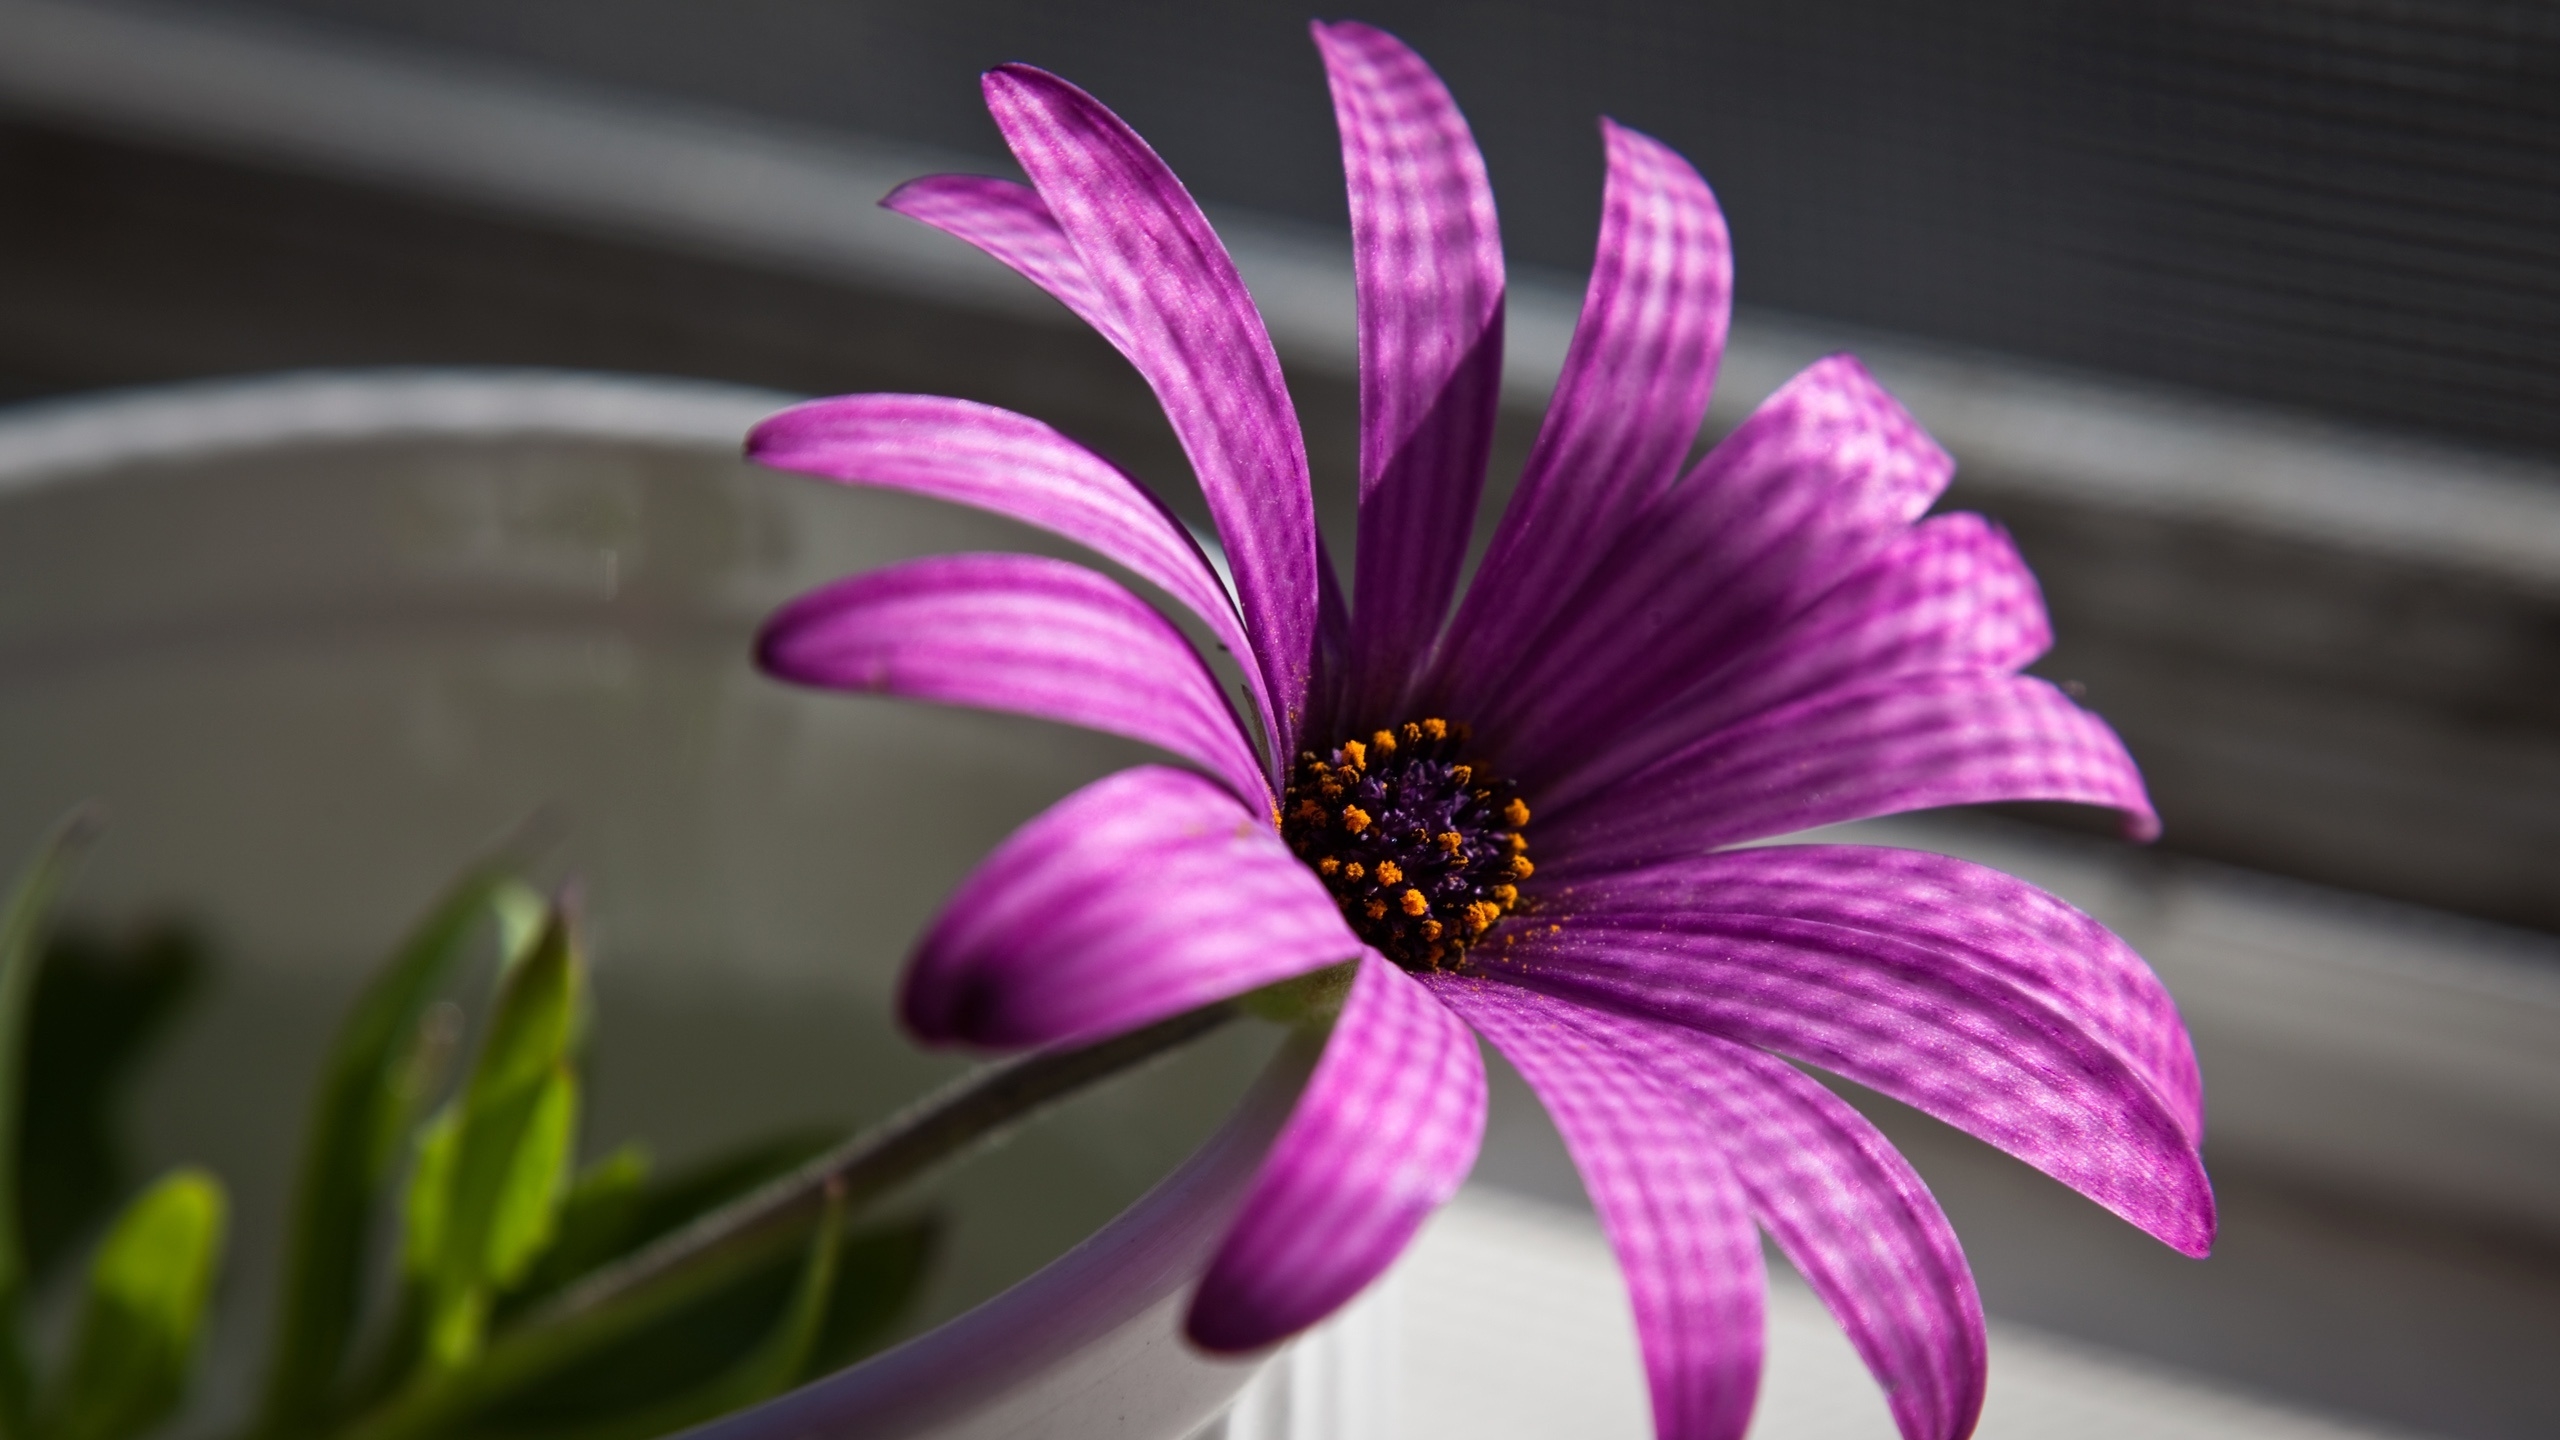 Superb Purple Flower for 2560x1440 HDTV resolution